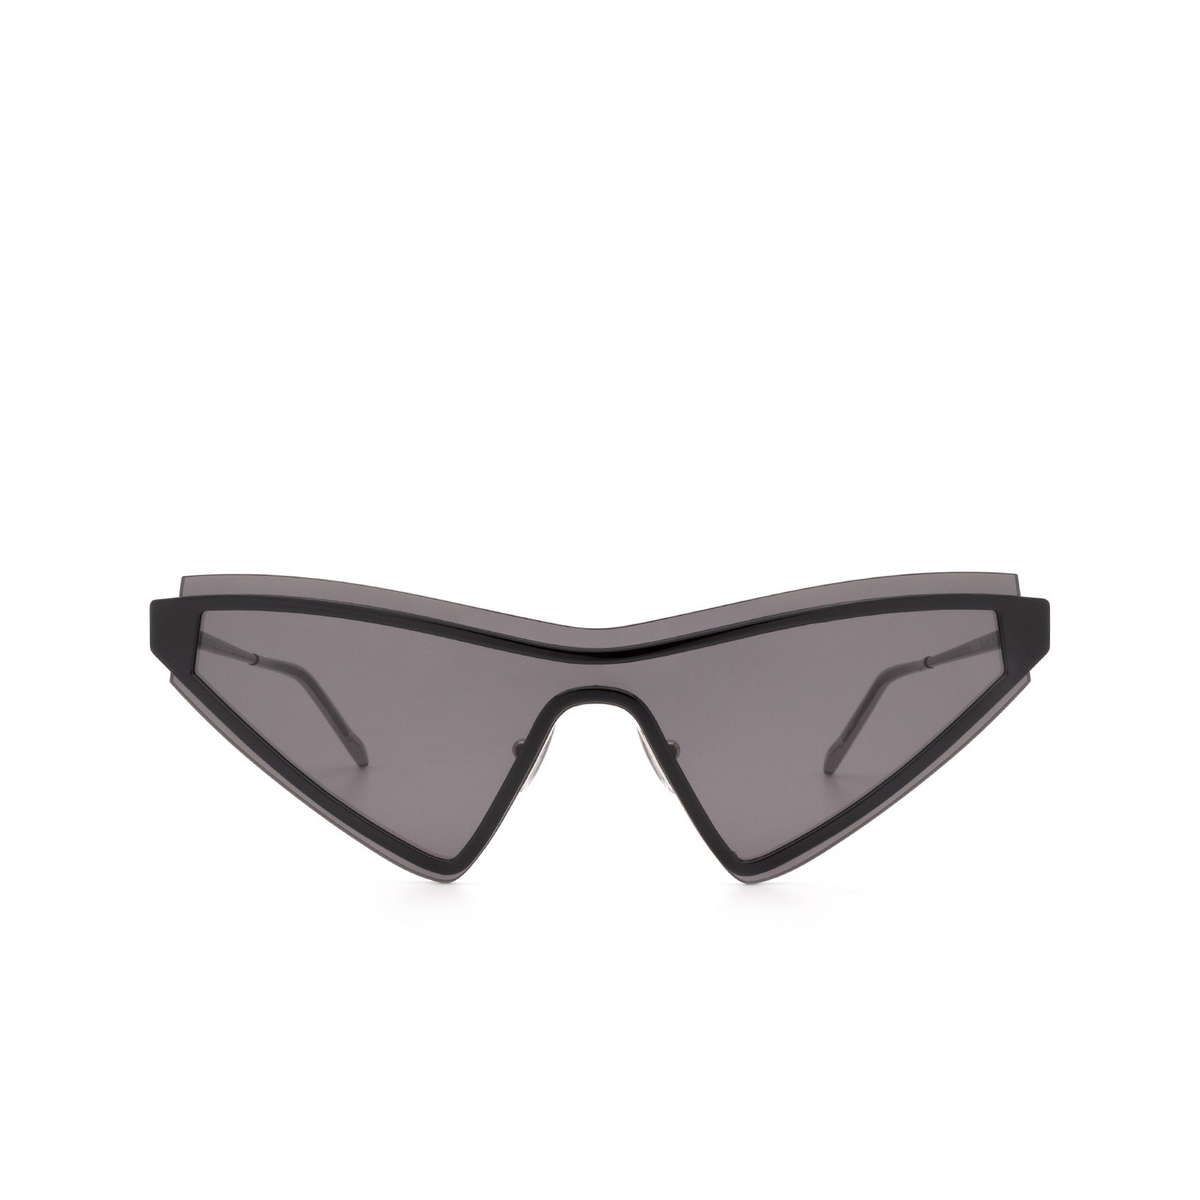 Sportmax® Cat-eye Sunglasses: SM0024 color Shiny Black 01A - front view.